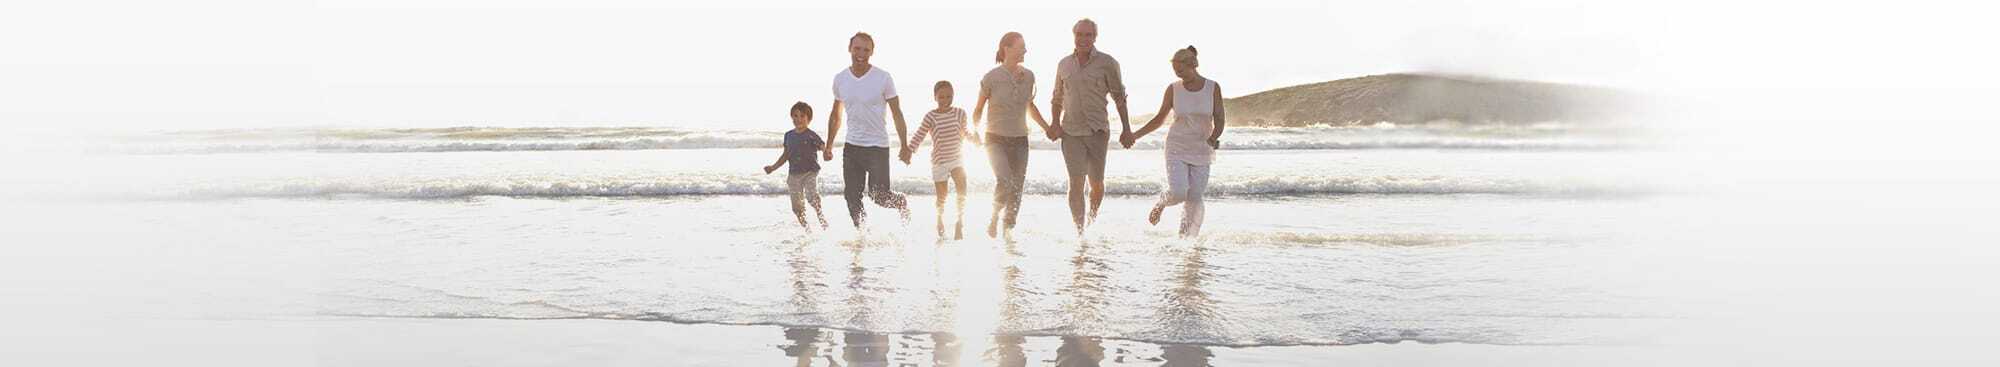 happy family on the beach